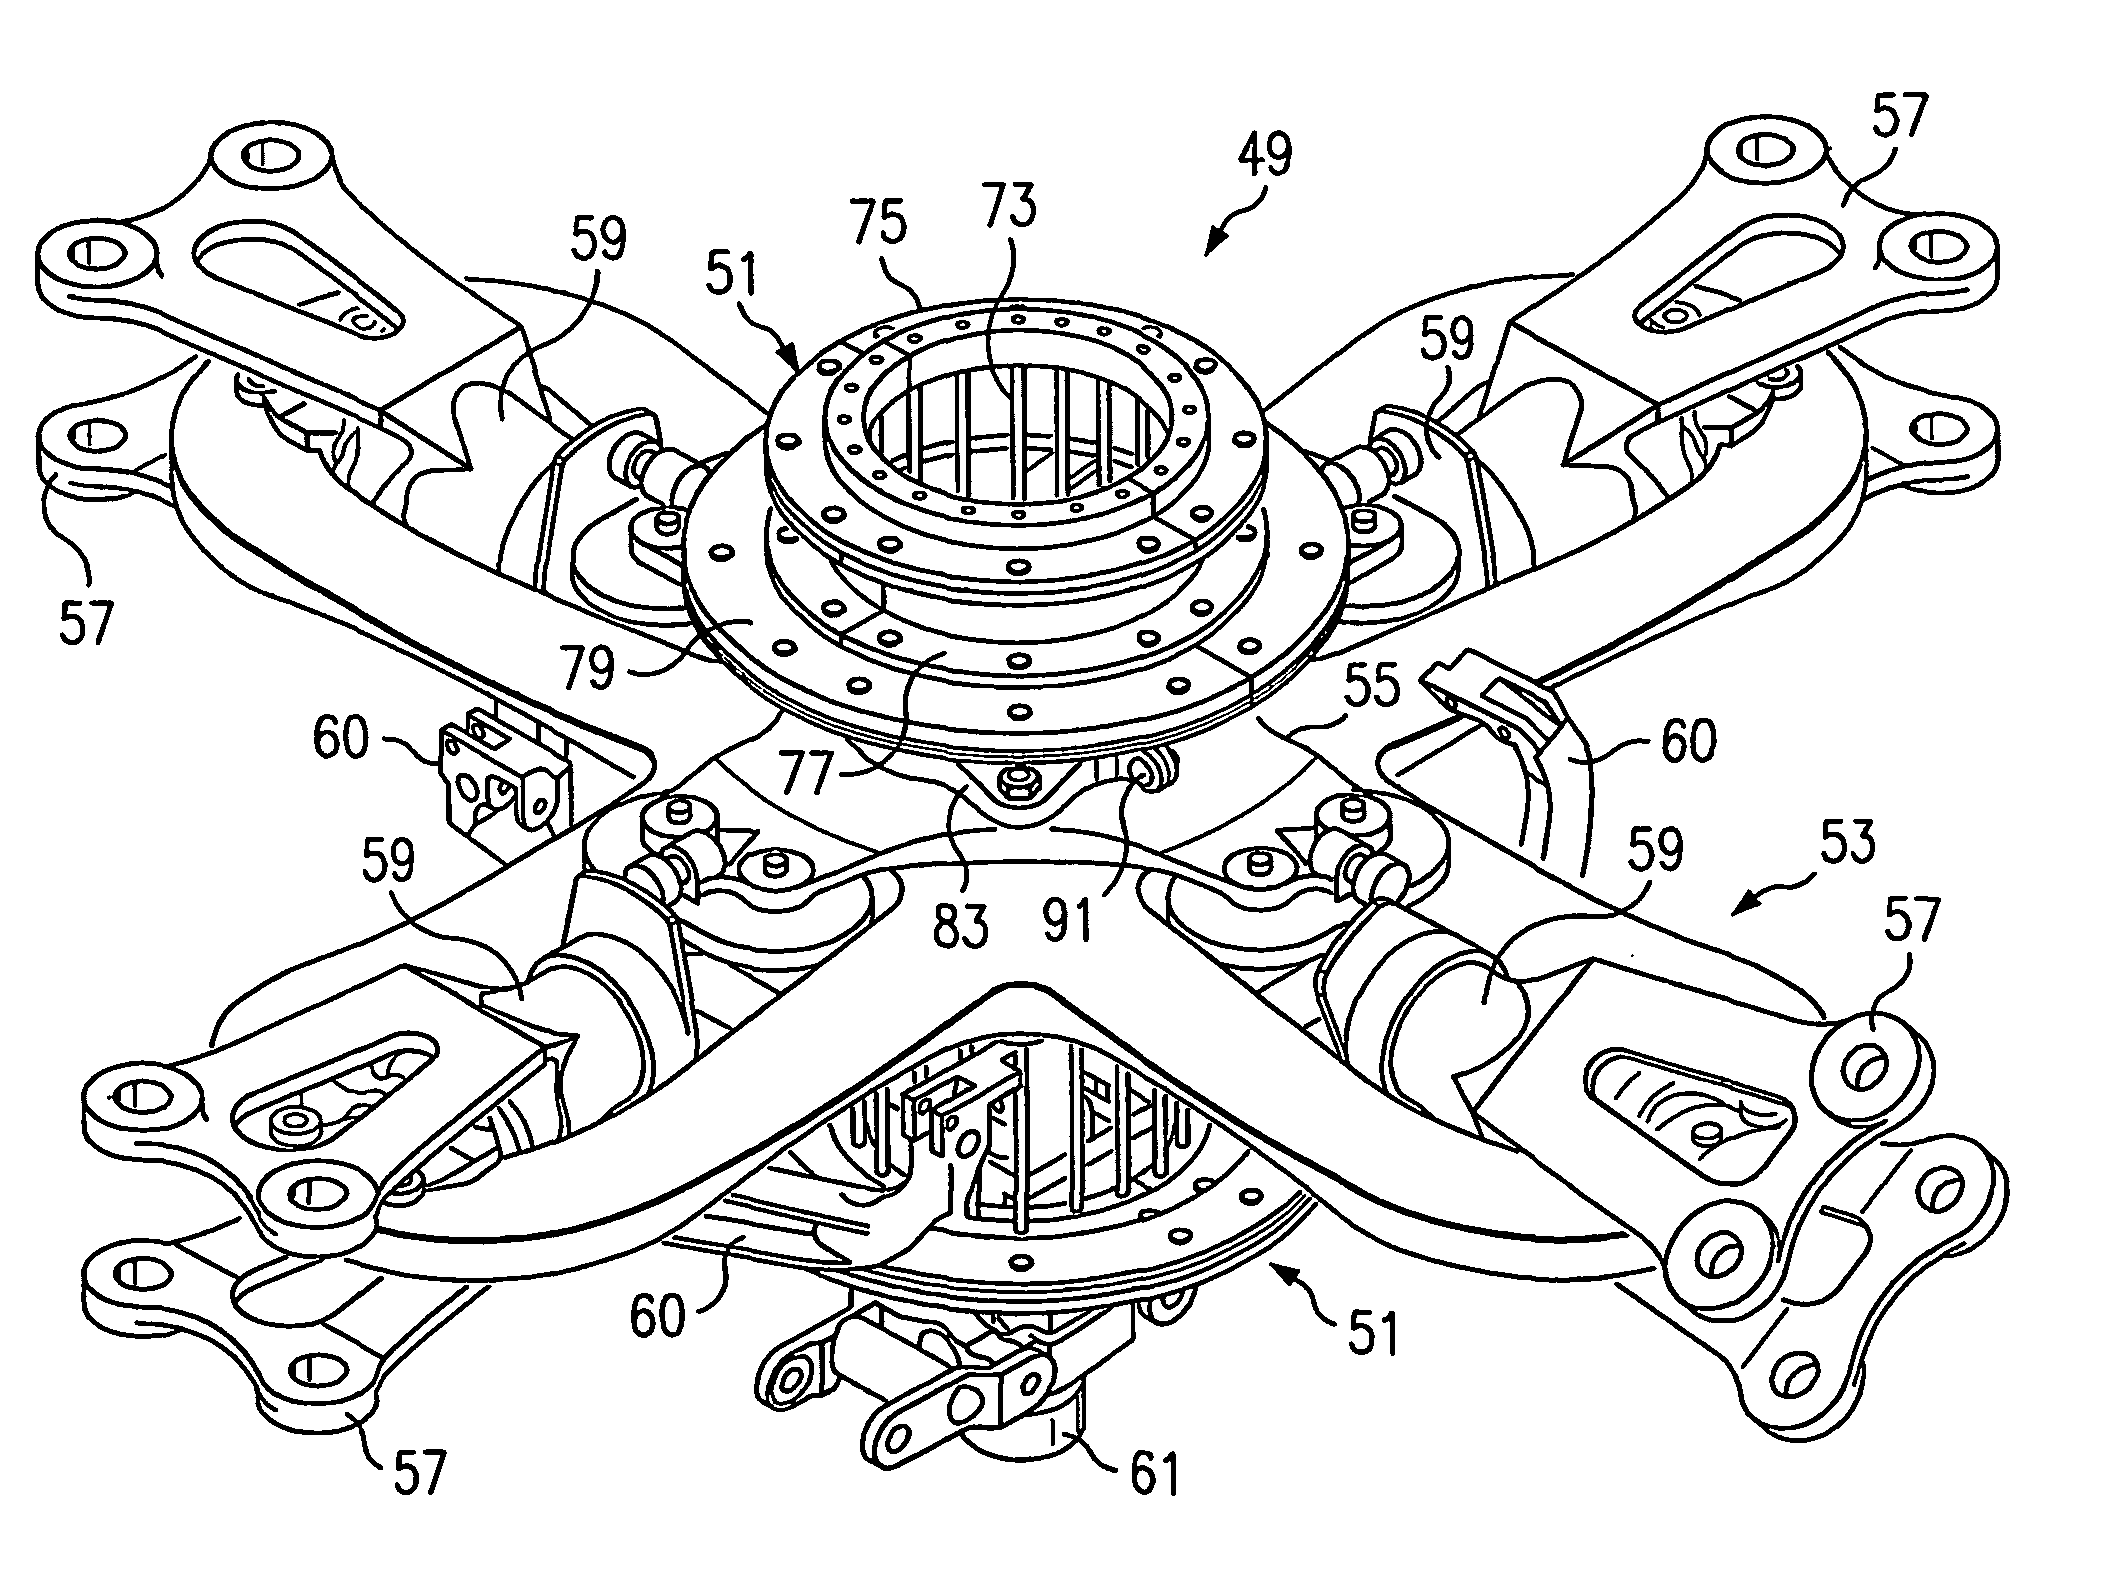 Rotor system vibration absorber